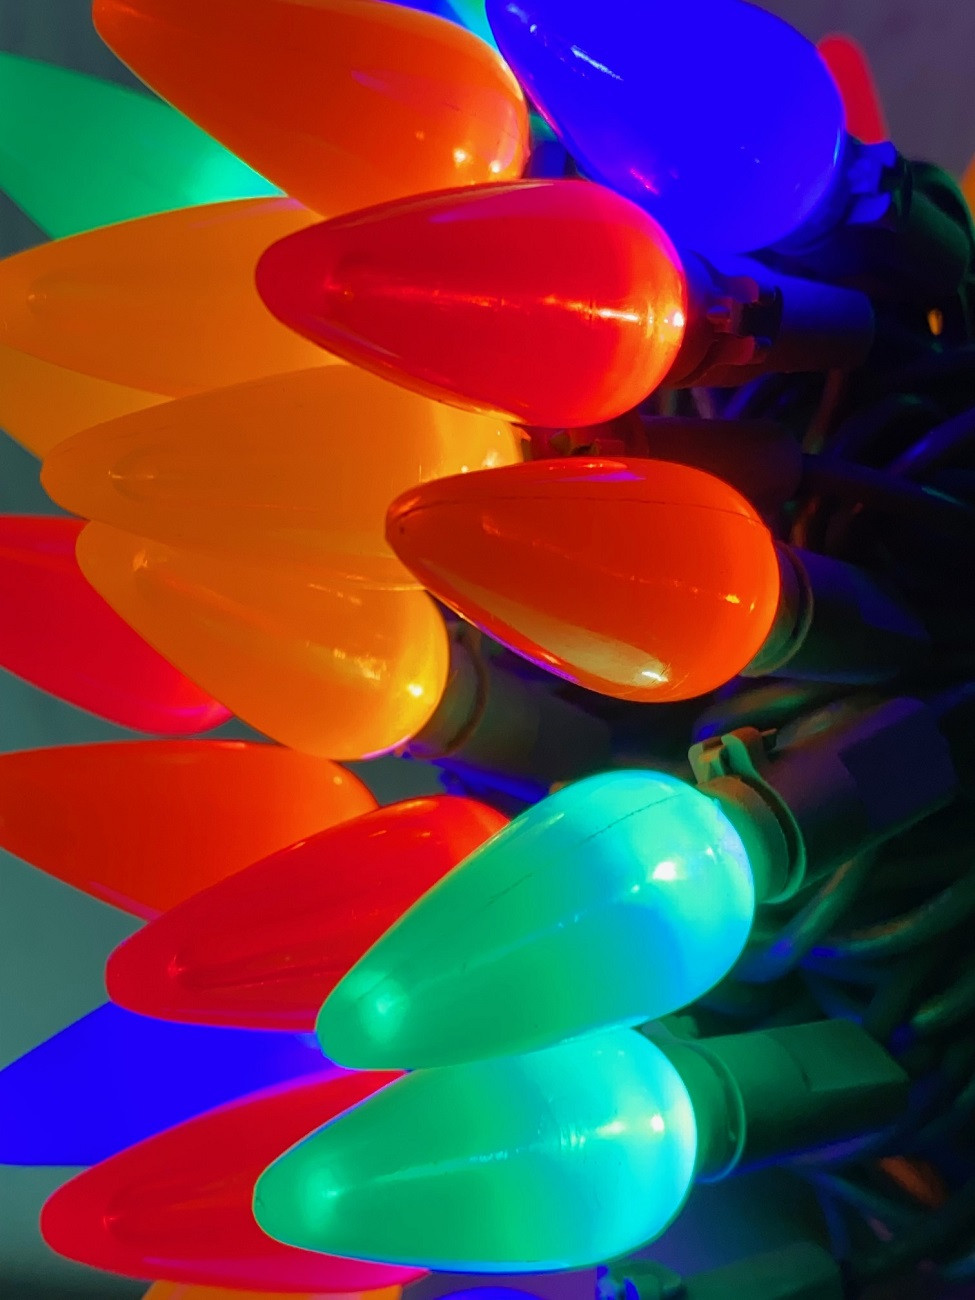 50-Light C6 LED Multi-Color Ceramic String Light